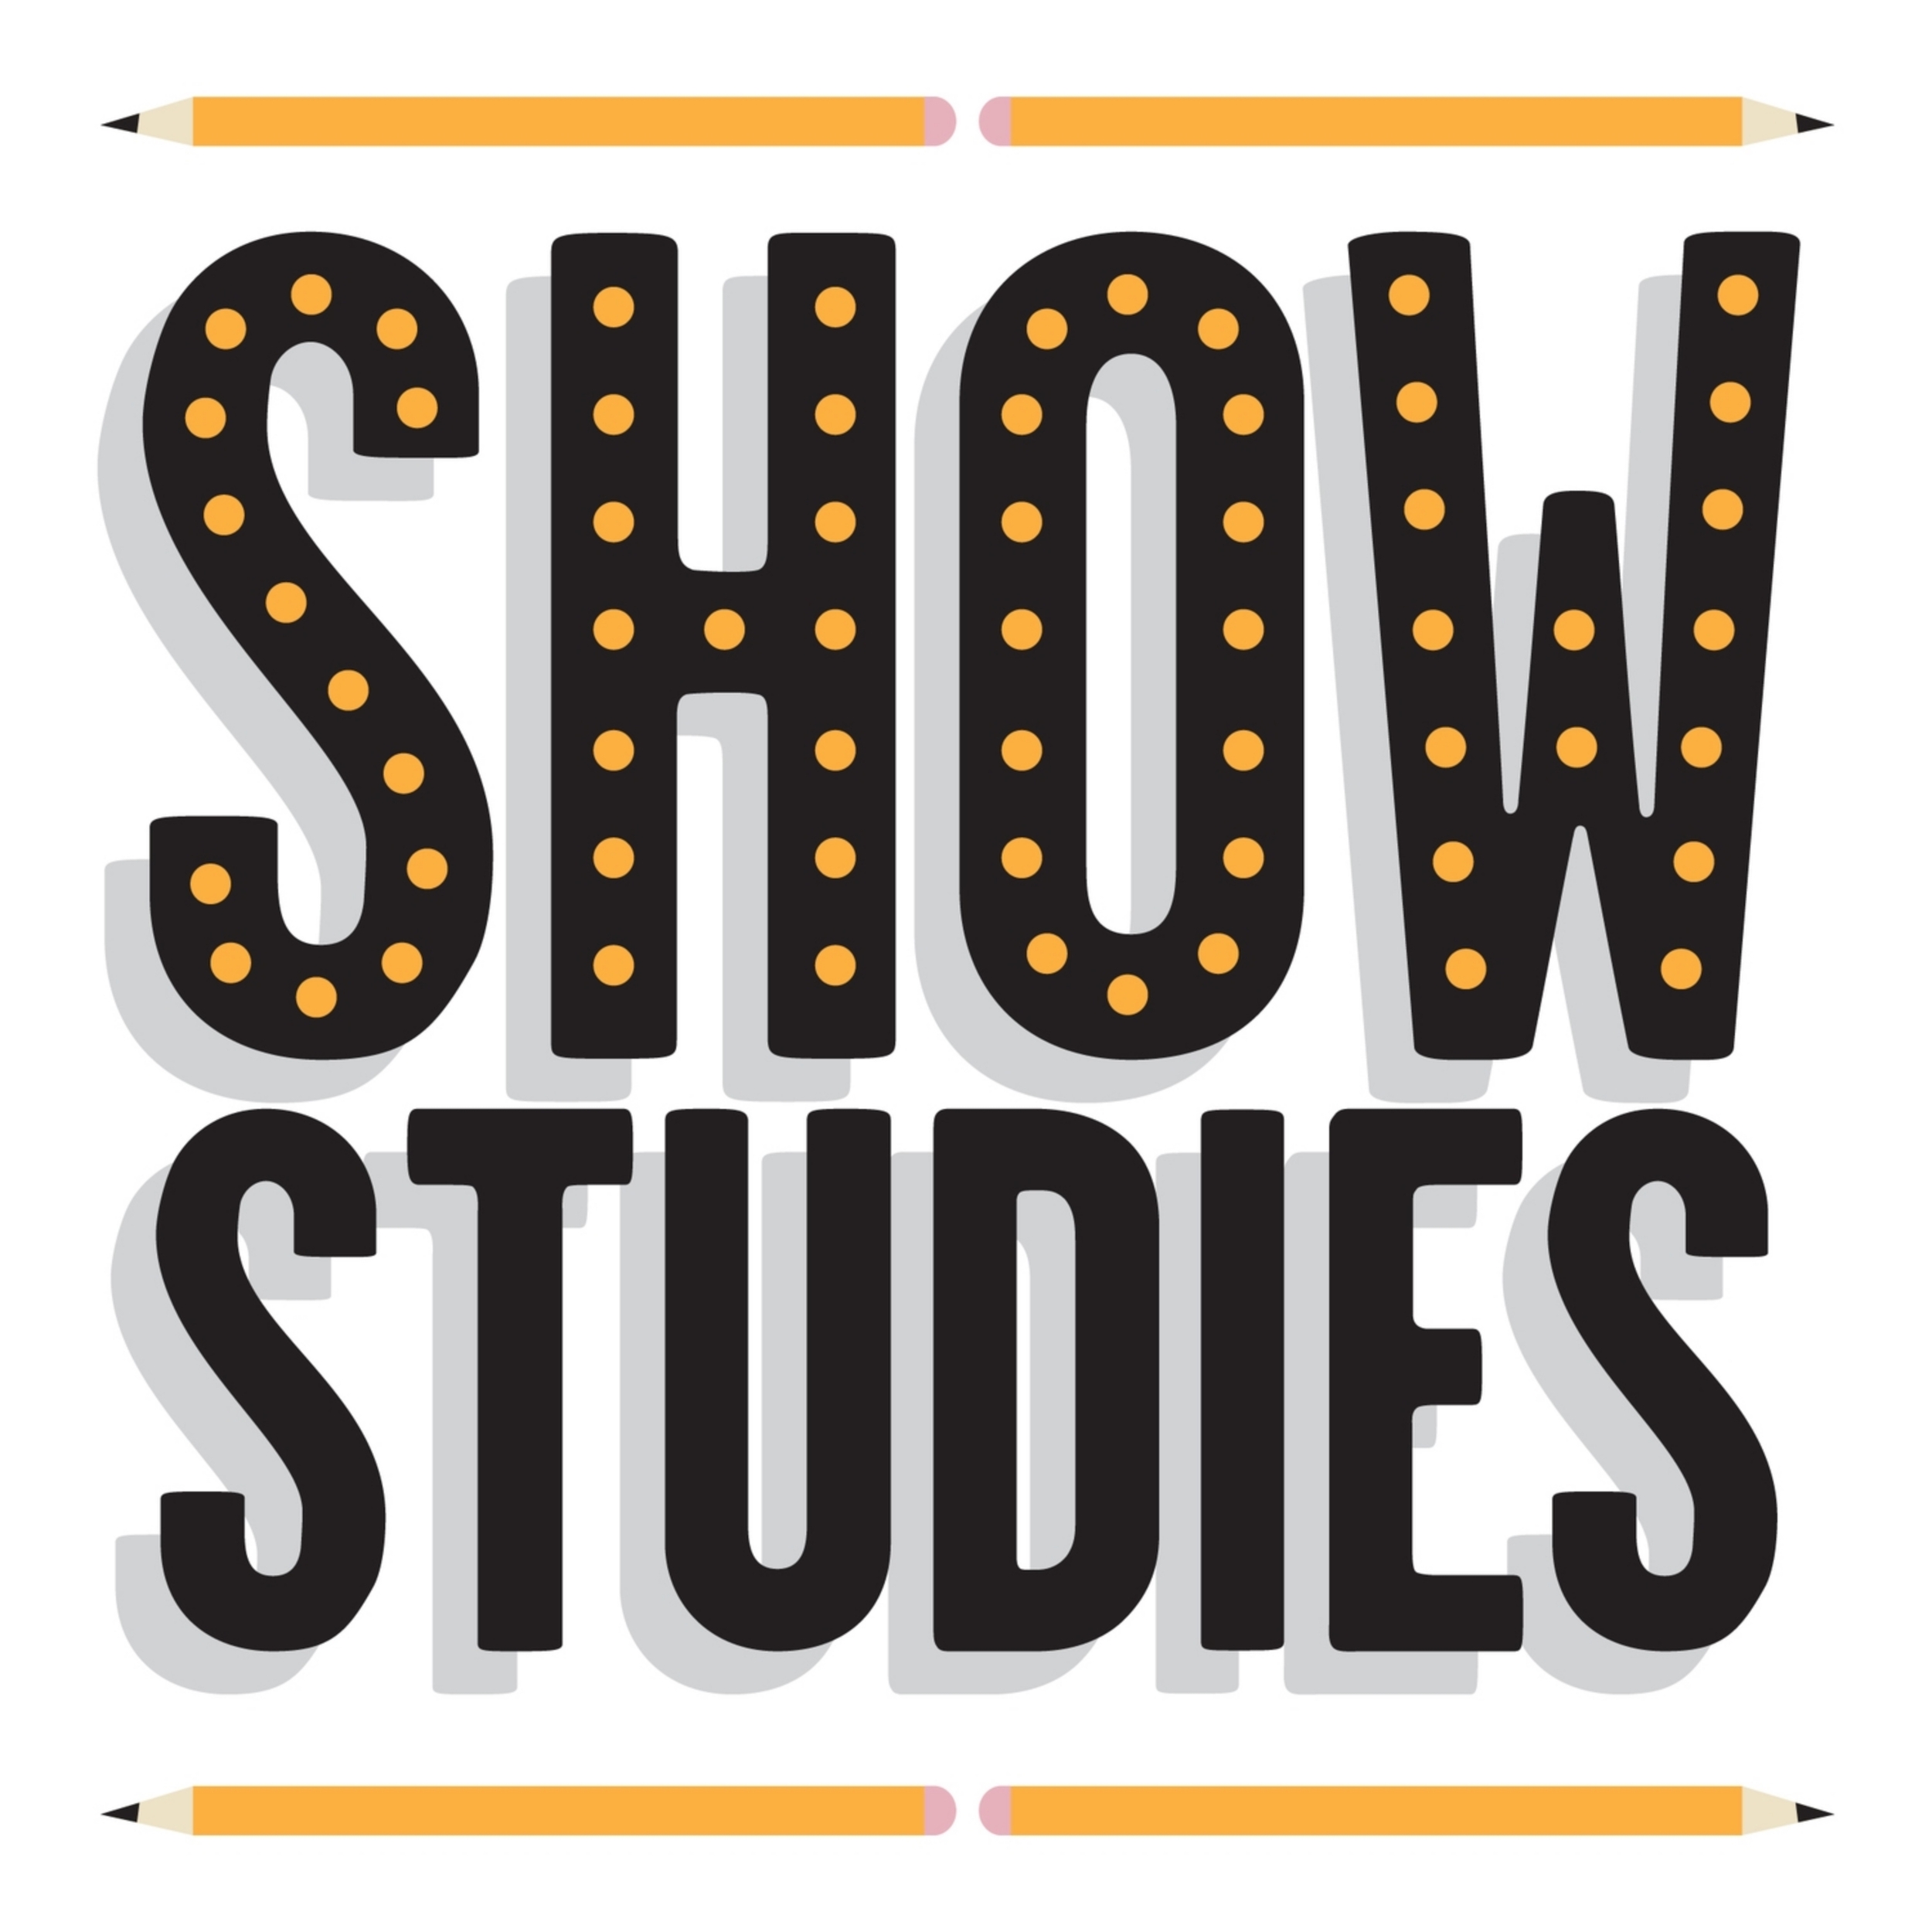 Show Studies